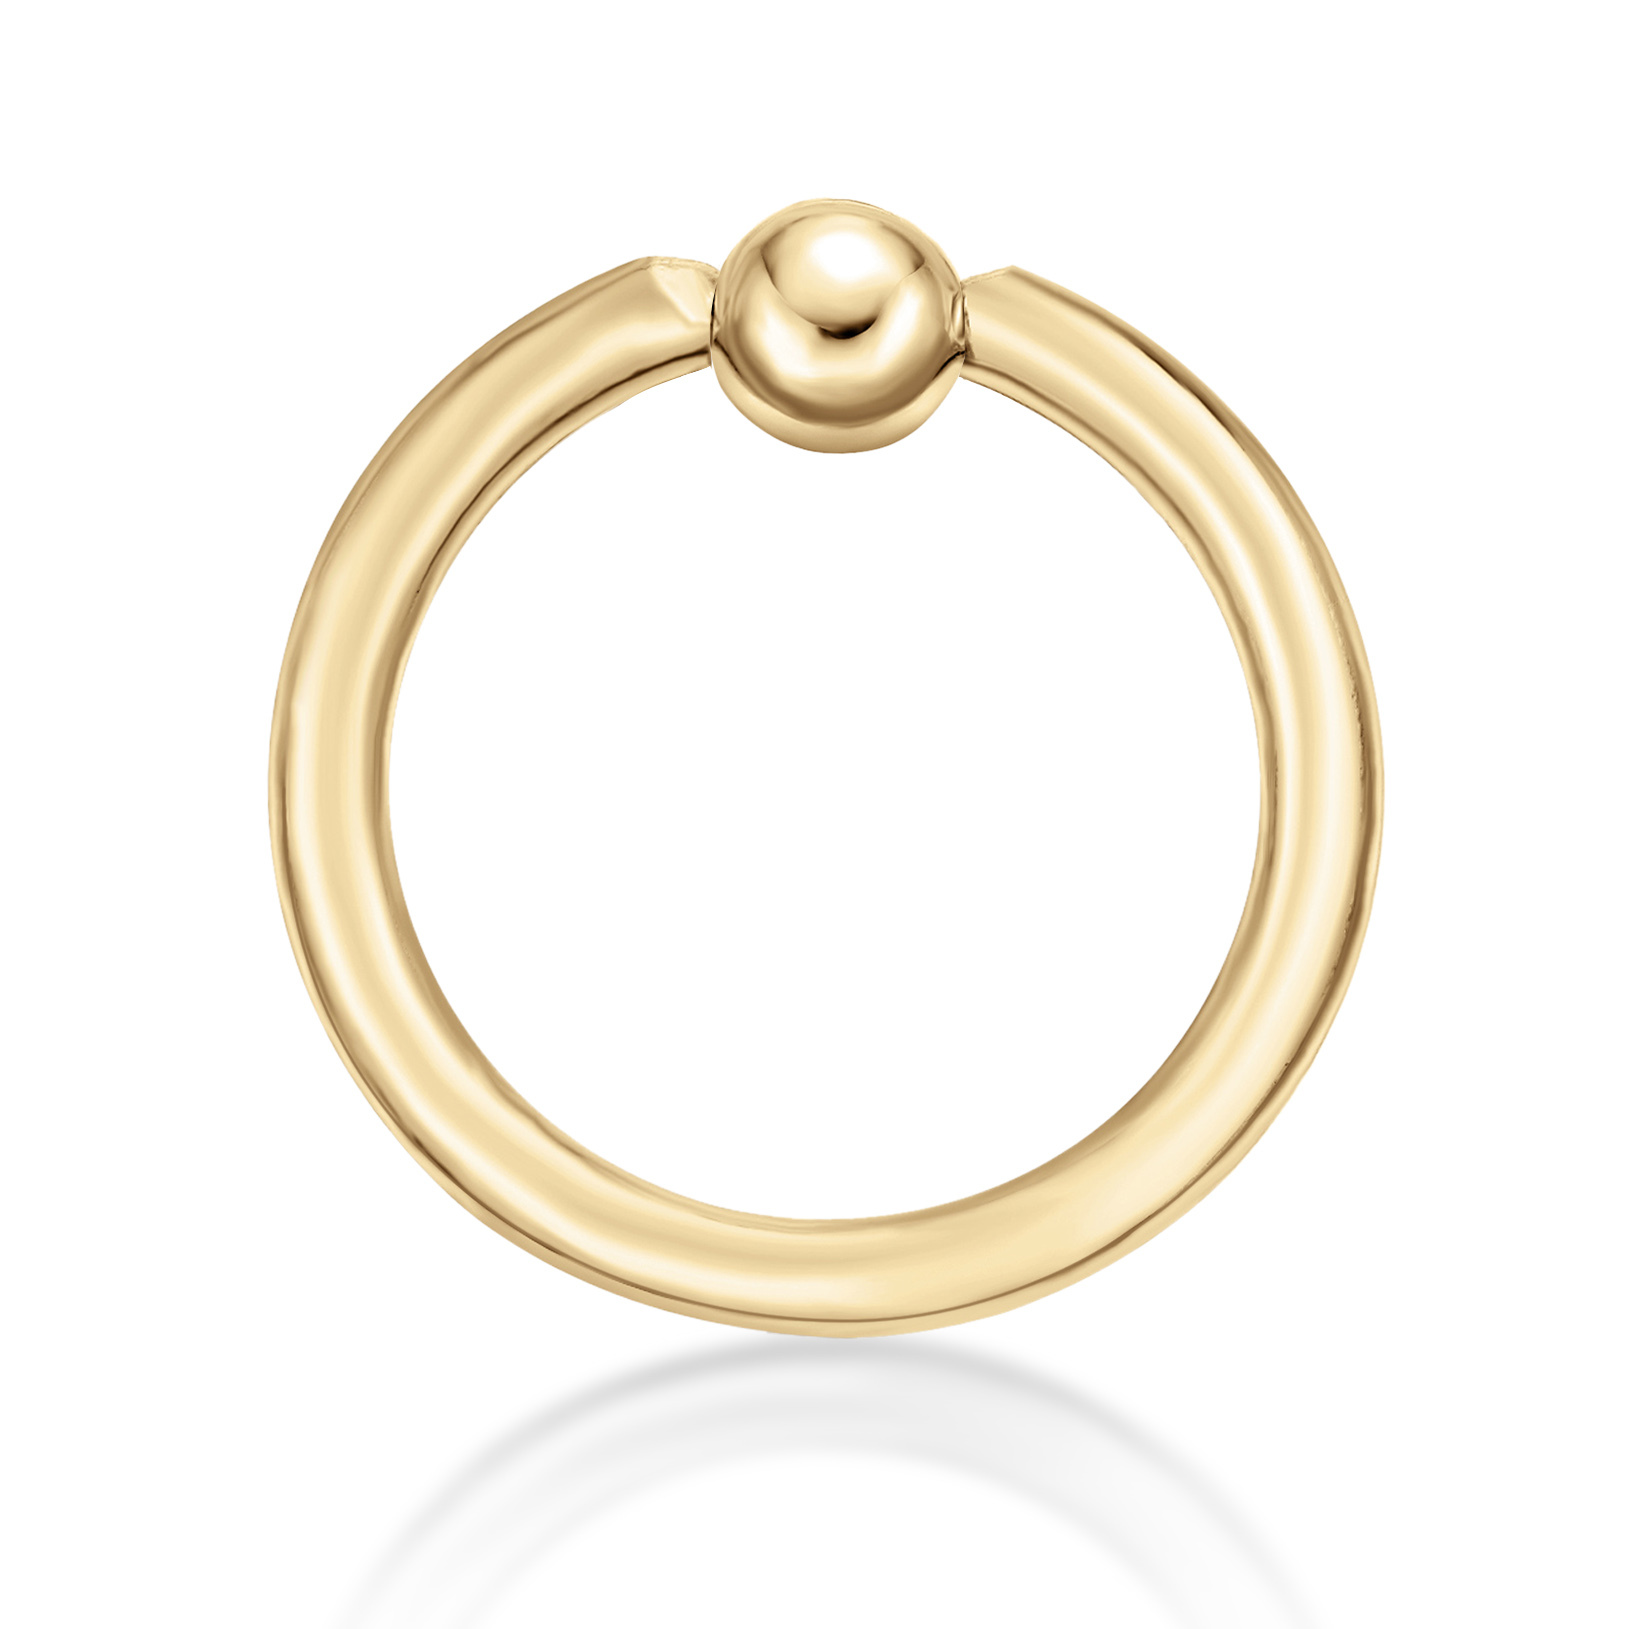 Lavari Jewelers Women's Universal Hoop Ring, 14K Yellow Gold, 3/8 Inches, 10 MM, 16 Gauge